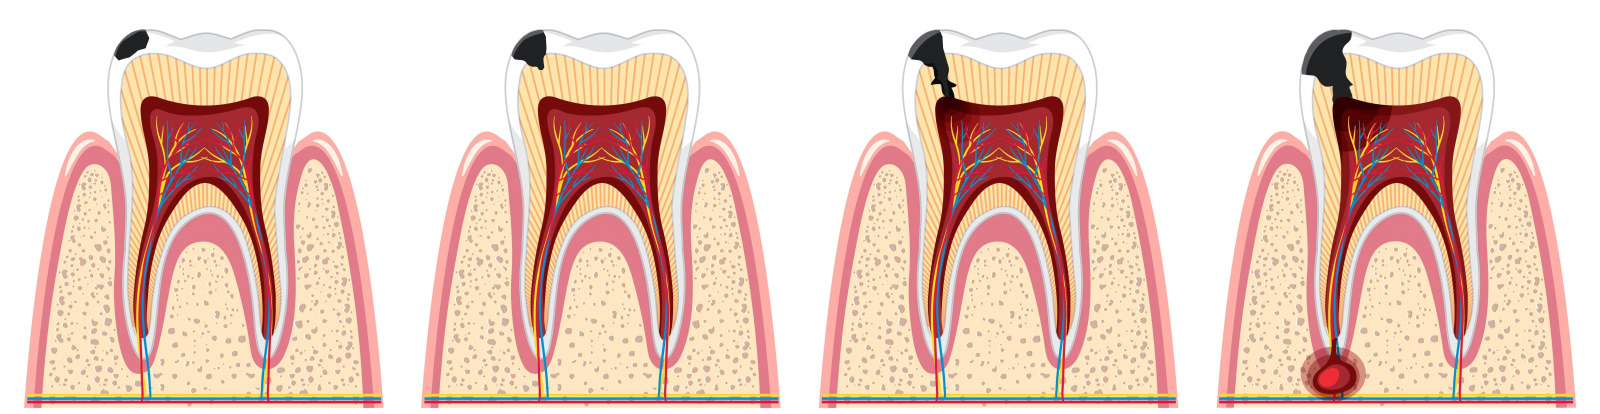 этапы развития гранулемы зуба